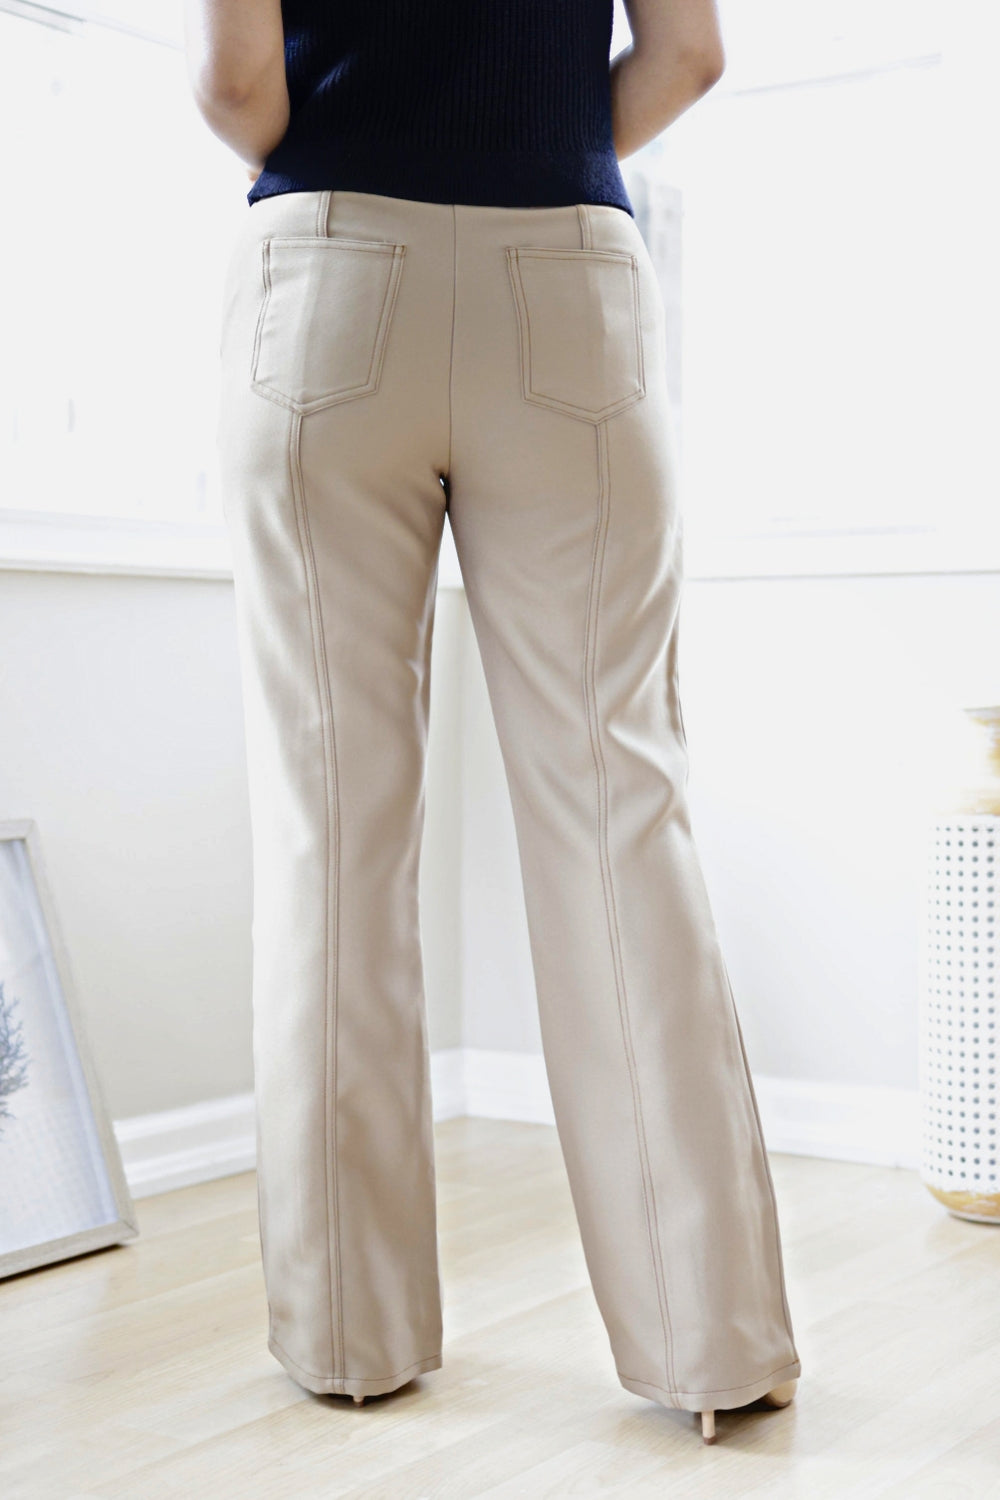 Petite High Waisted Bootcut Pants (Khaki) – Petite Dressing